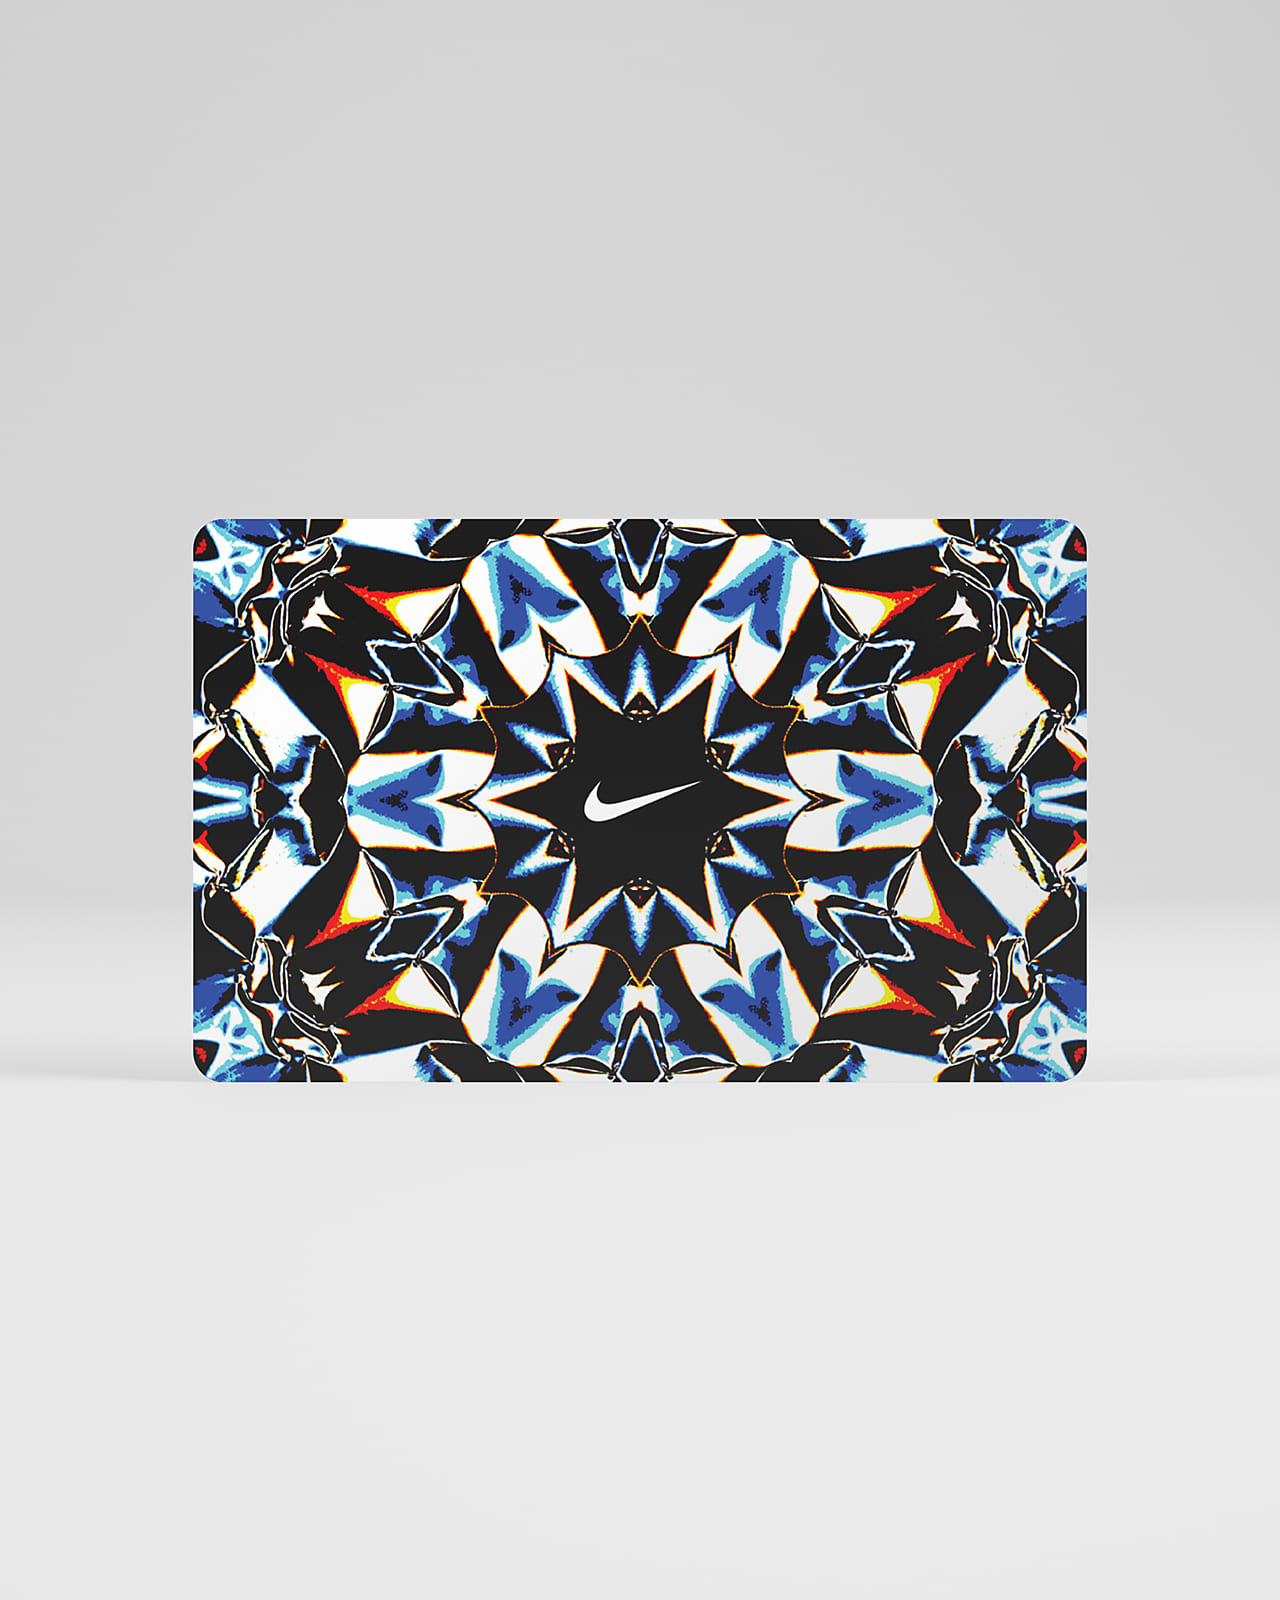 La tarjeta de regalo Nike se envía por correo en una minicaja de tenis Nike